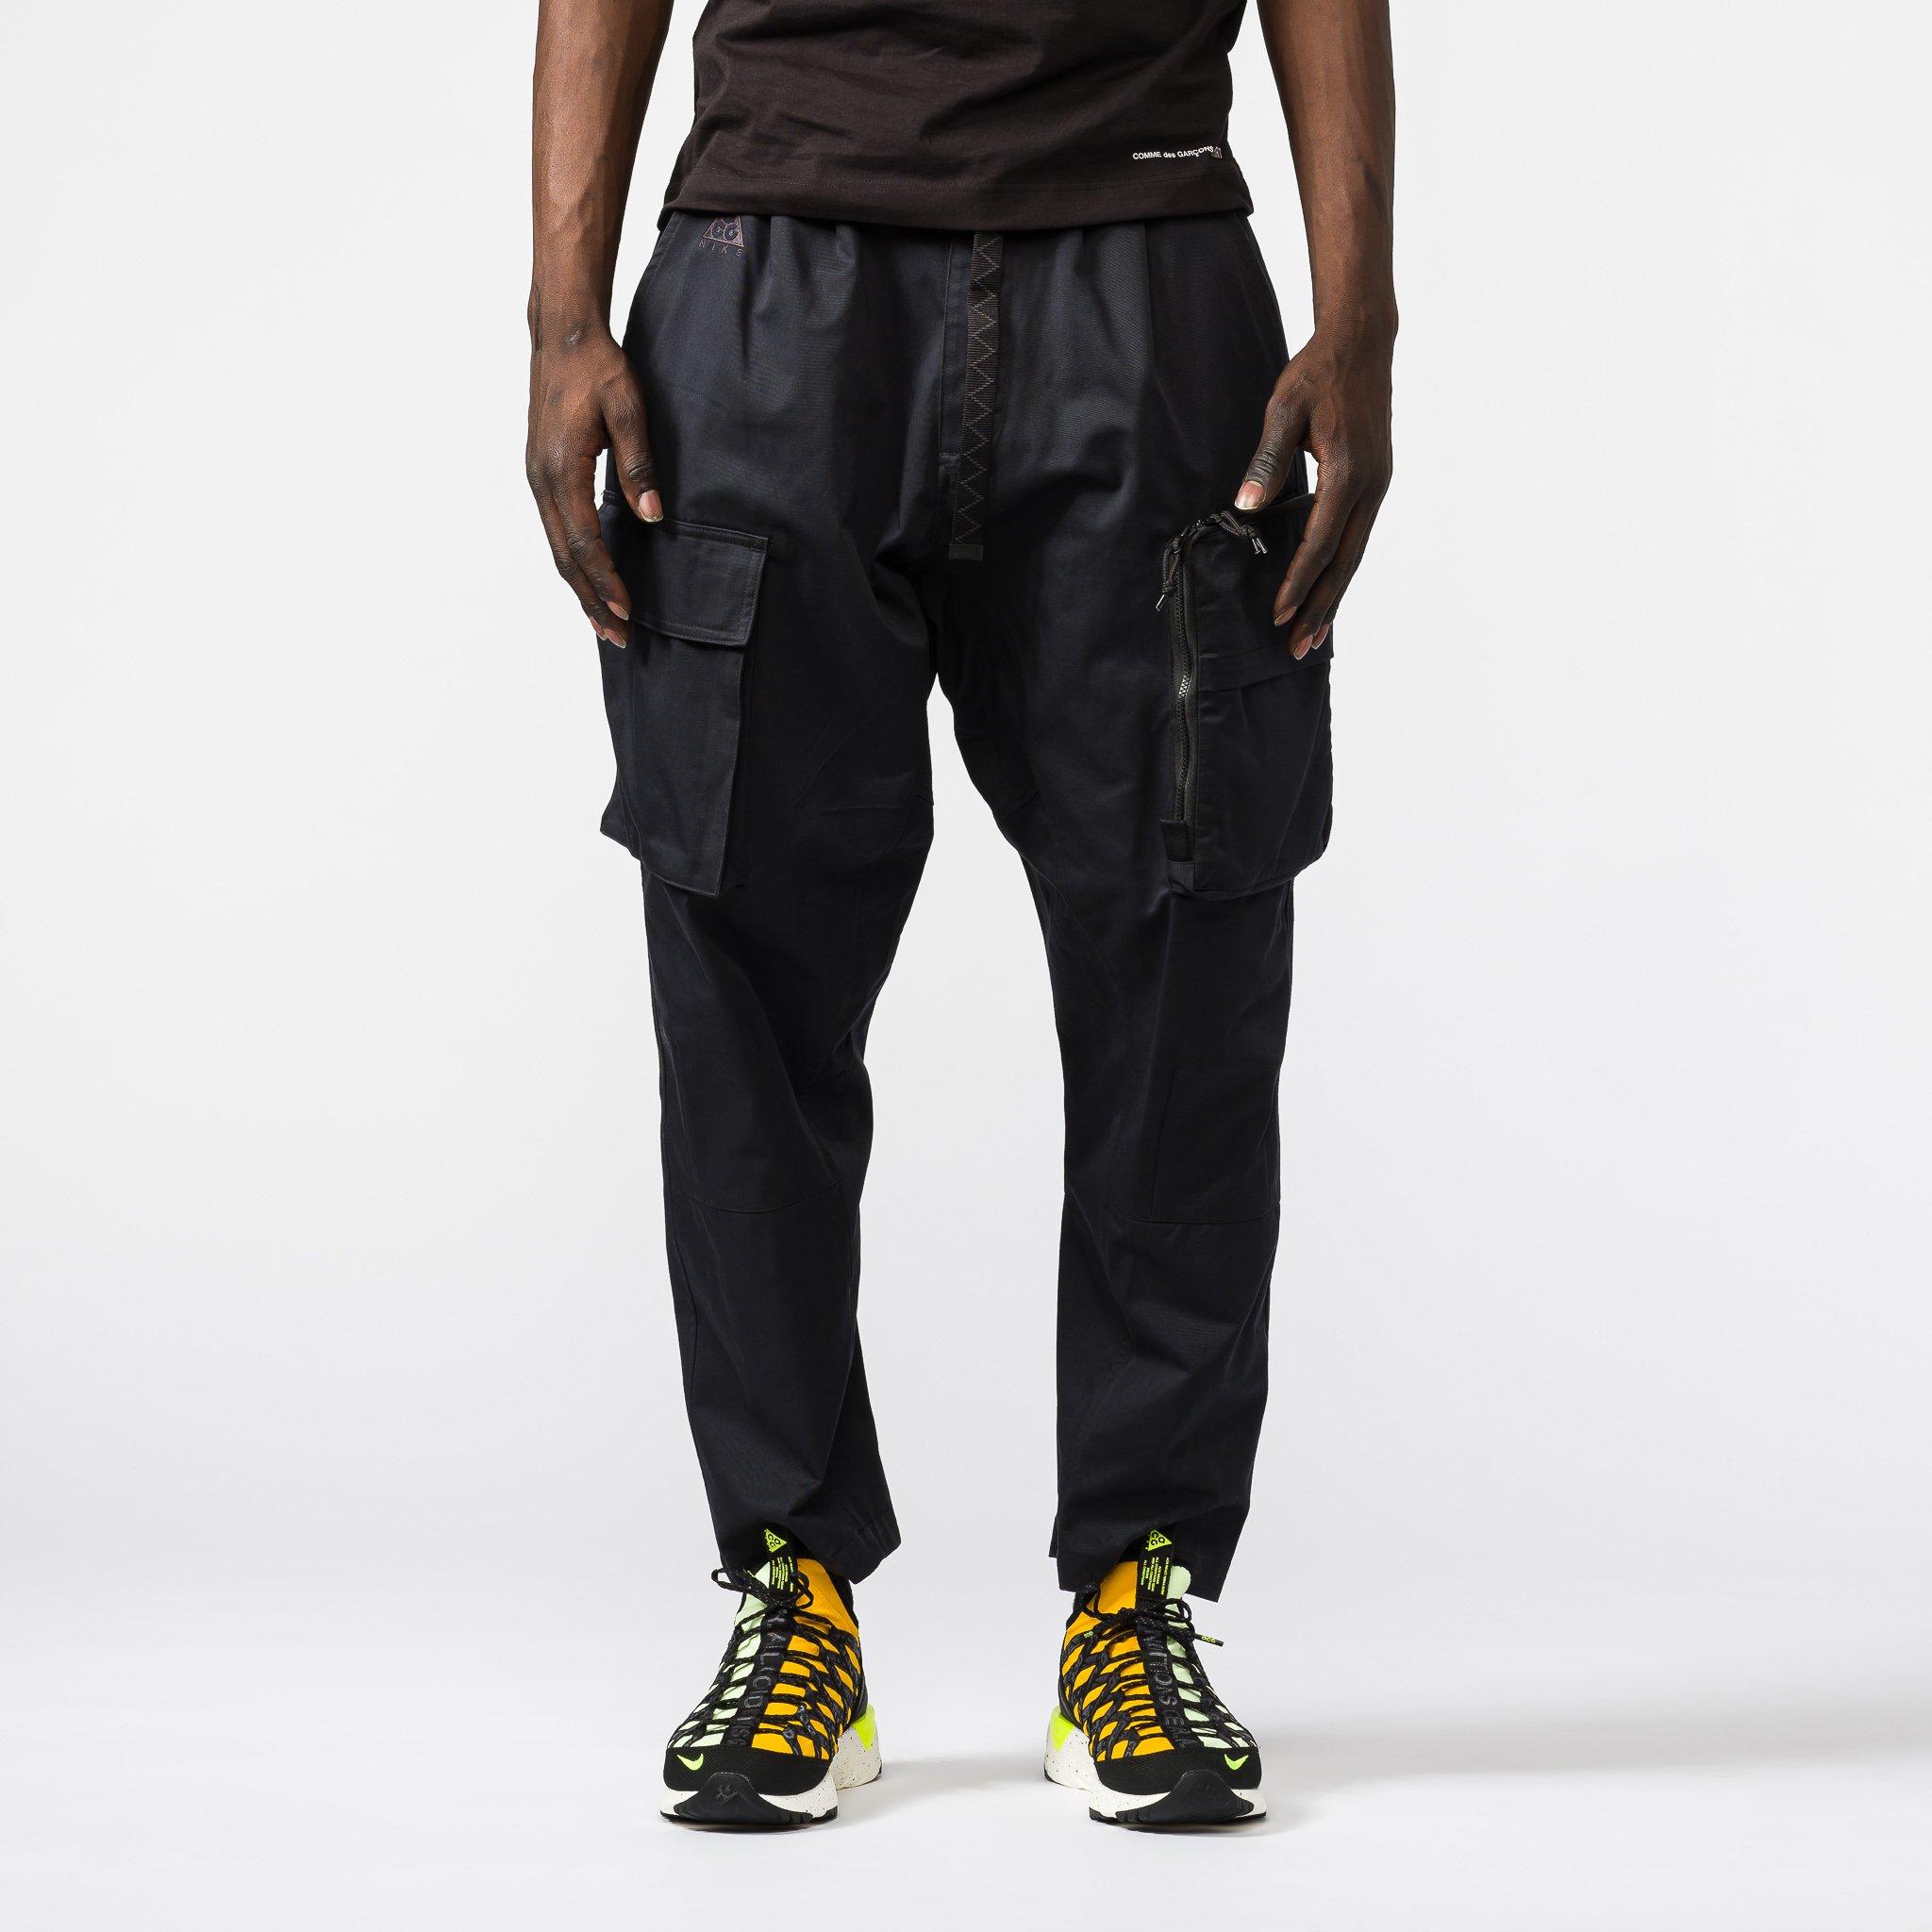 Nike Cotton Acg Woven Cargo Pants in Black for Men